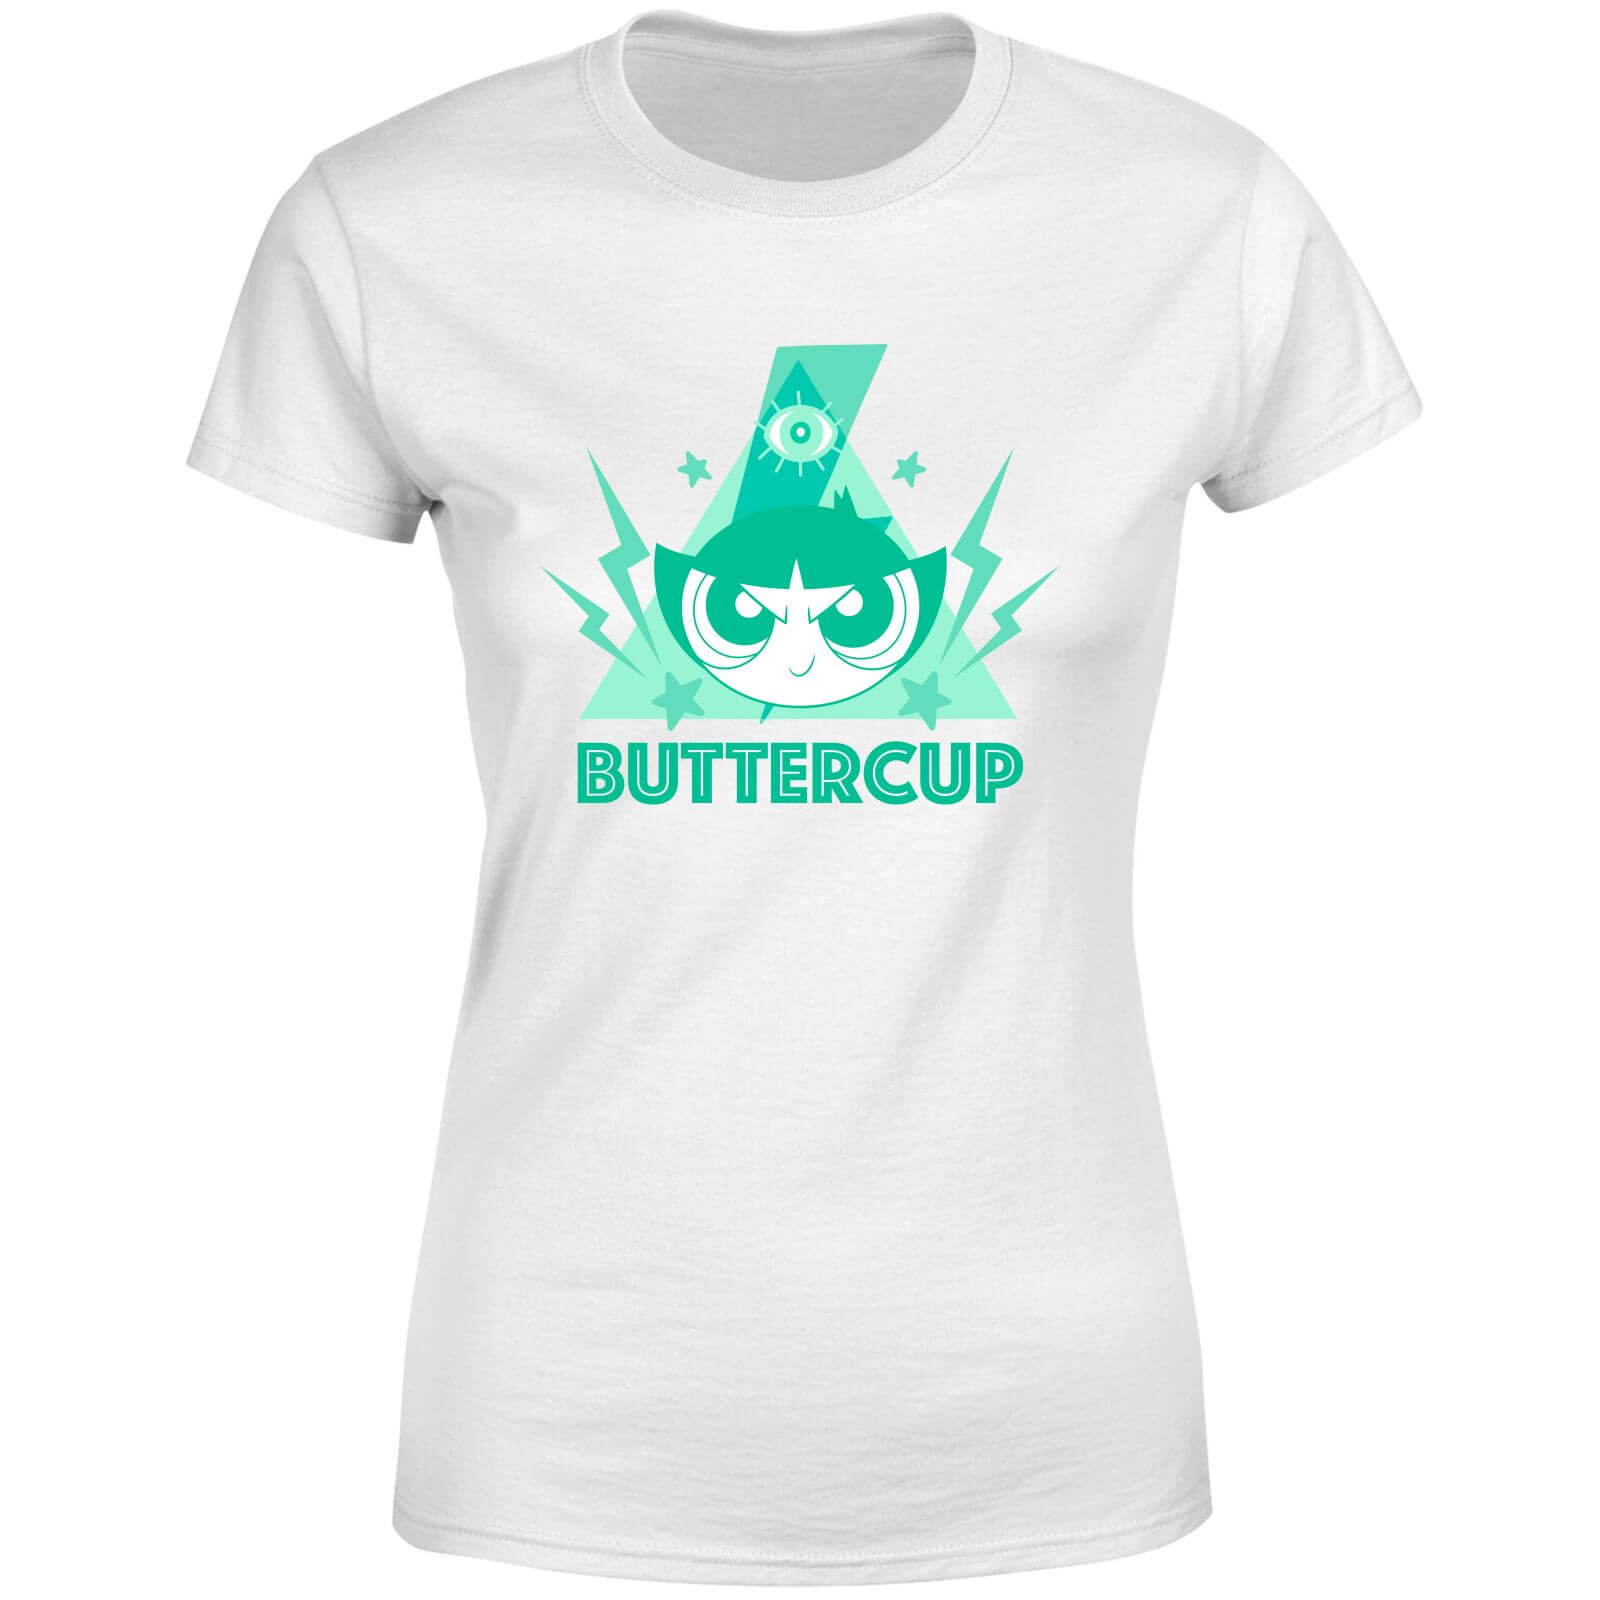 The Powerpuff Girls Buttercup Women's T-Shirt - White - S - White